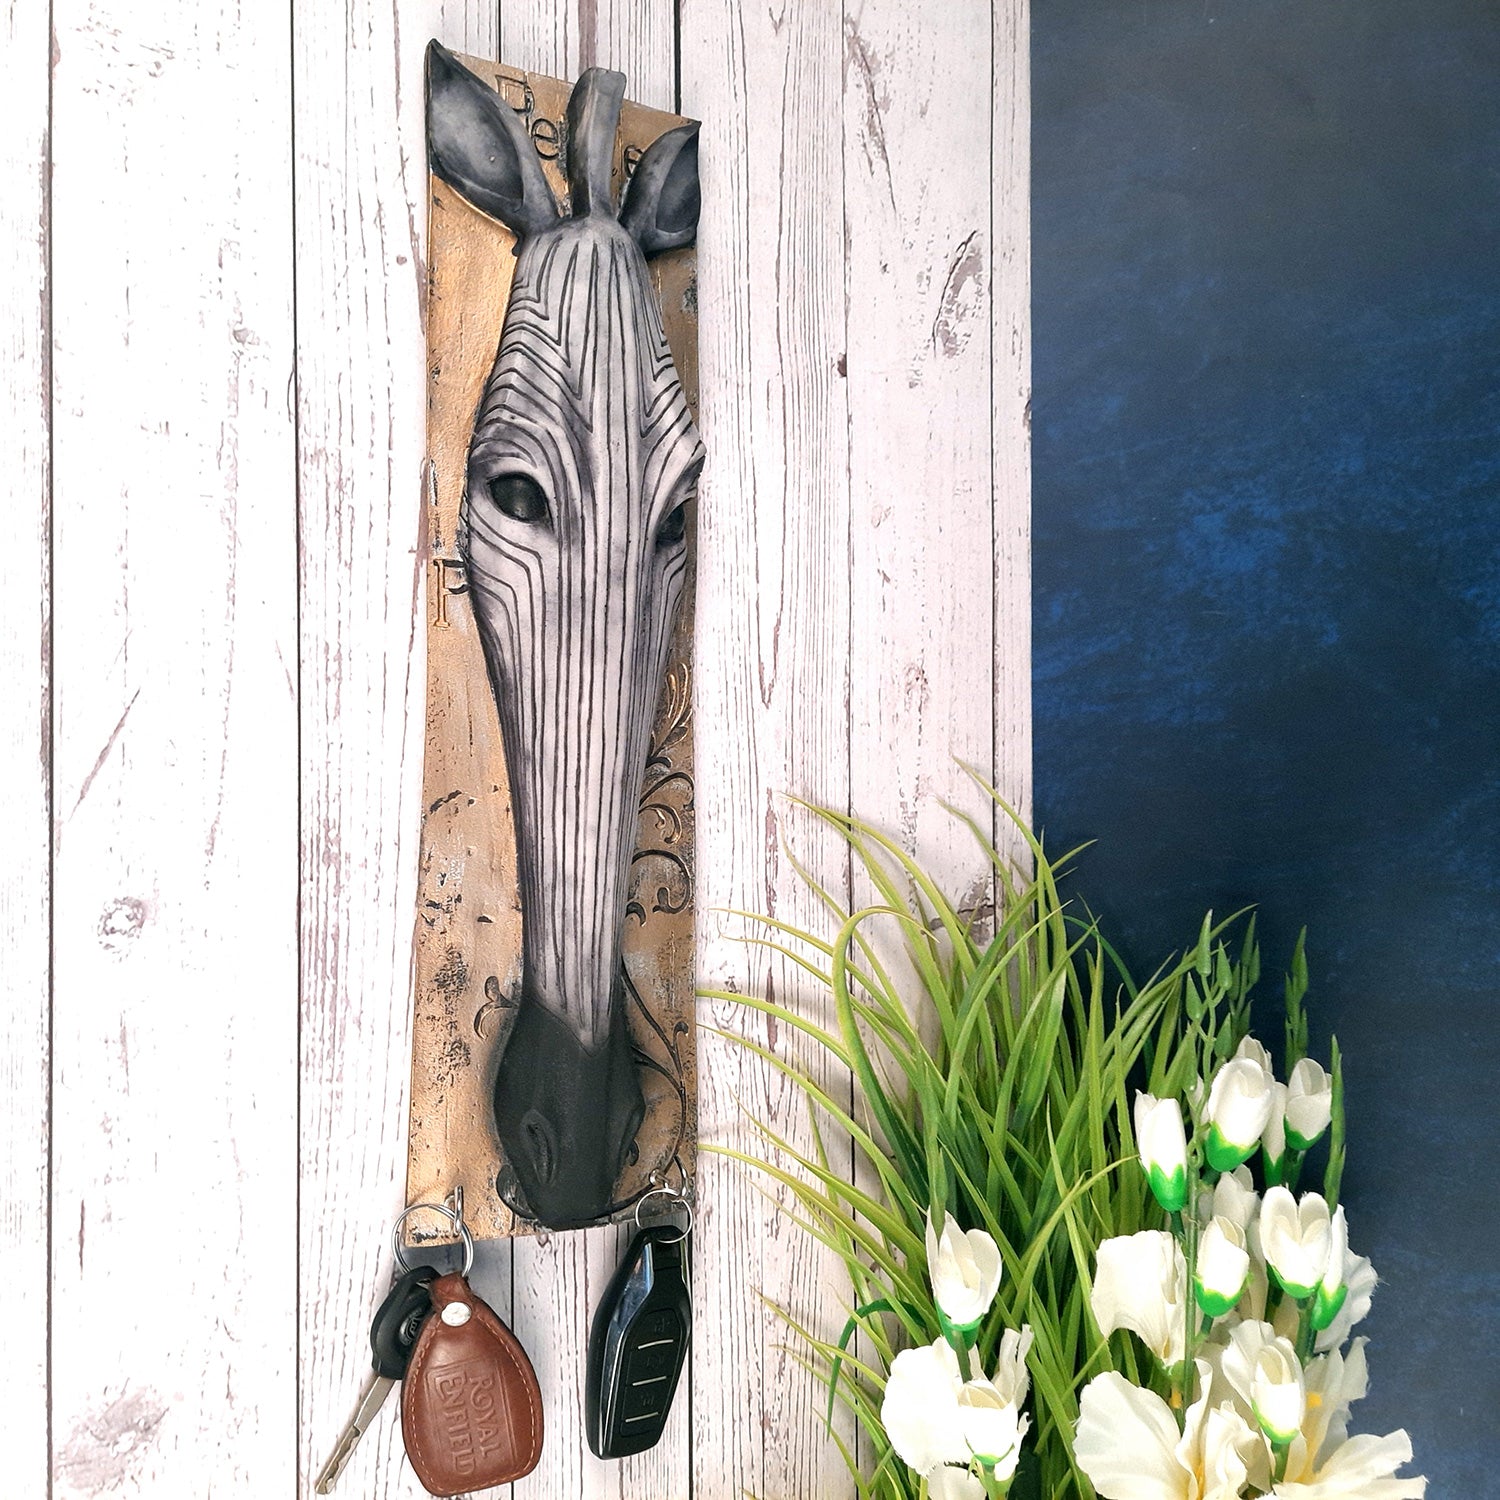 Key Holder Wall Hanging | Key Hook Hanger Stand - Zebra Design  | Keys Organizer - For Home, Entrance, Office Decor & Gifts - 16 Inch (2 Hooks)